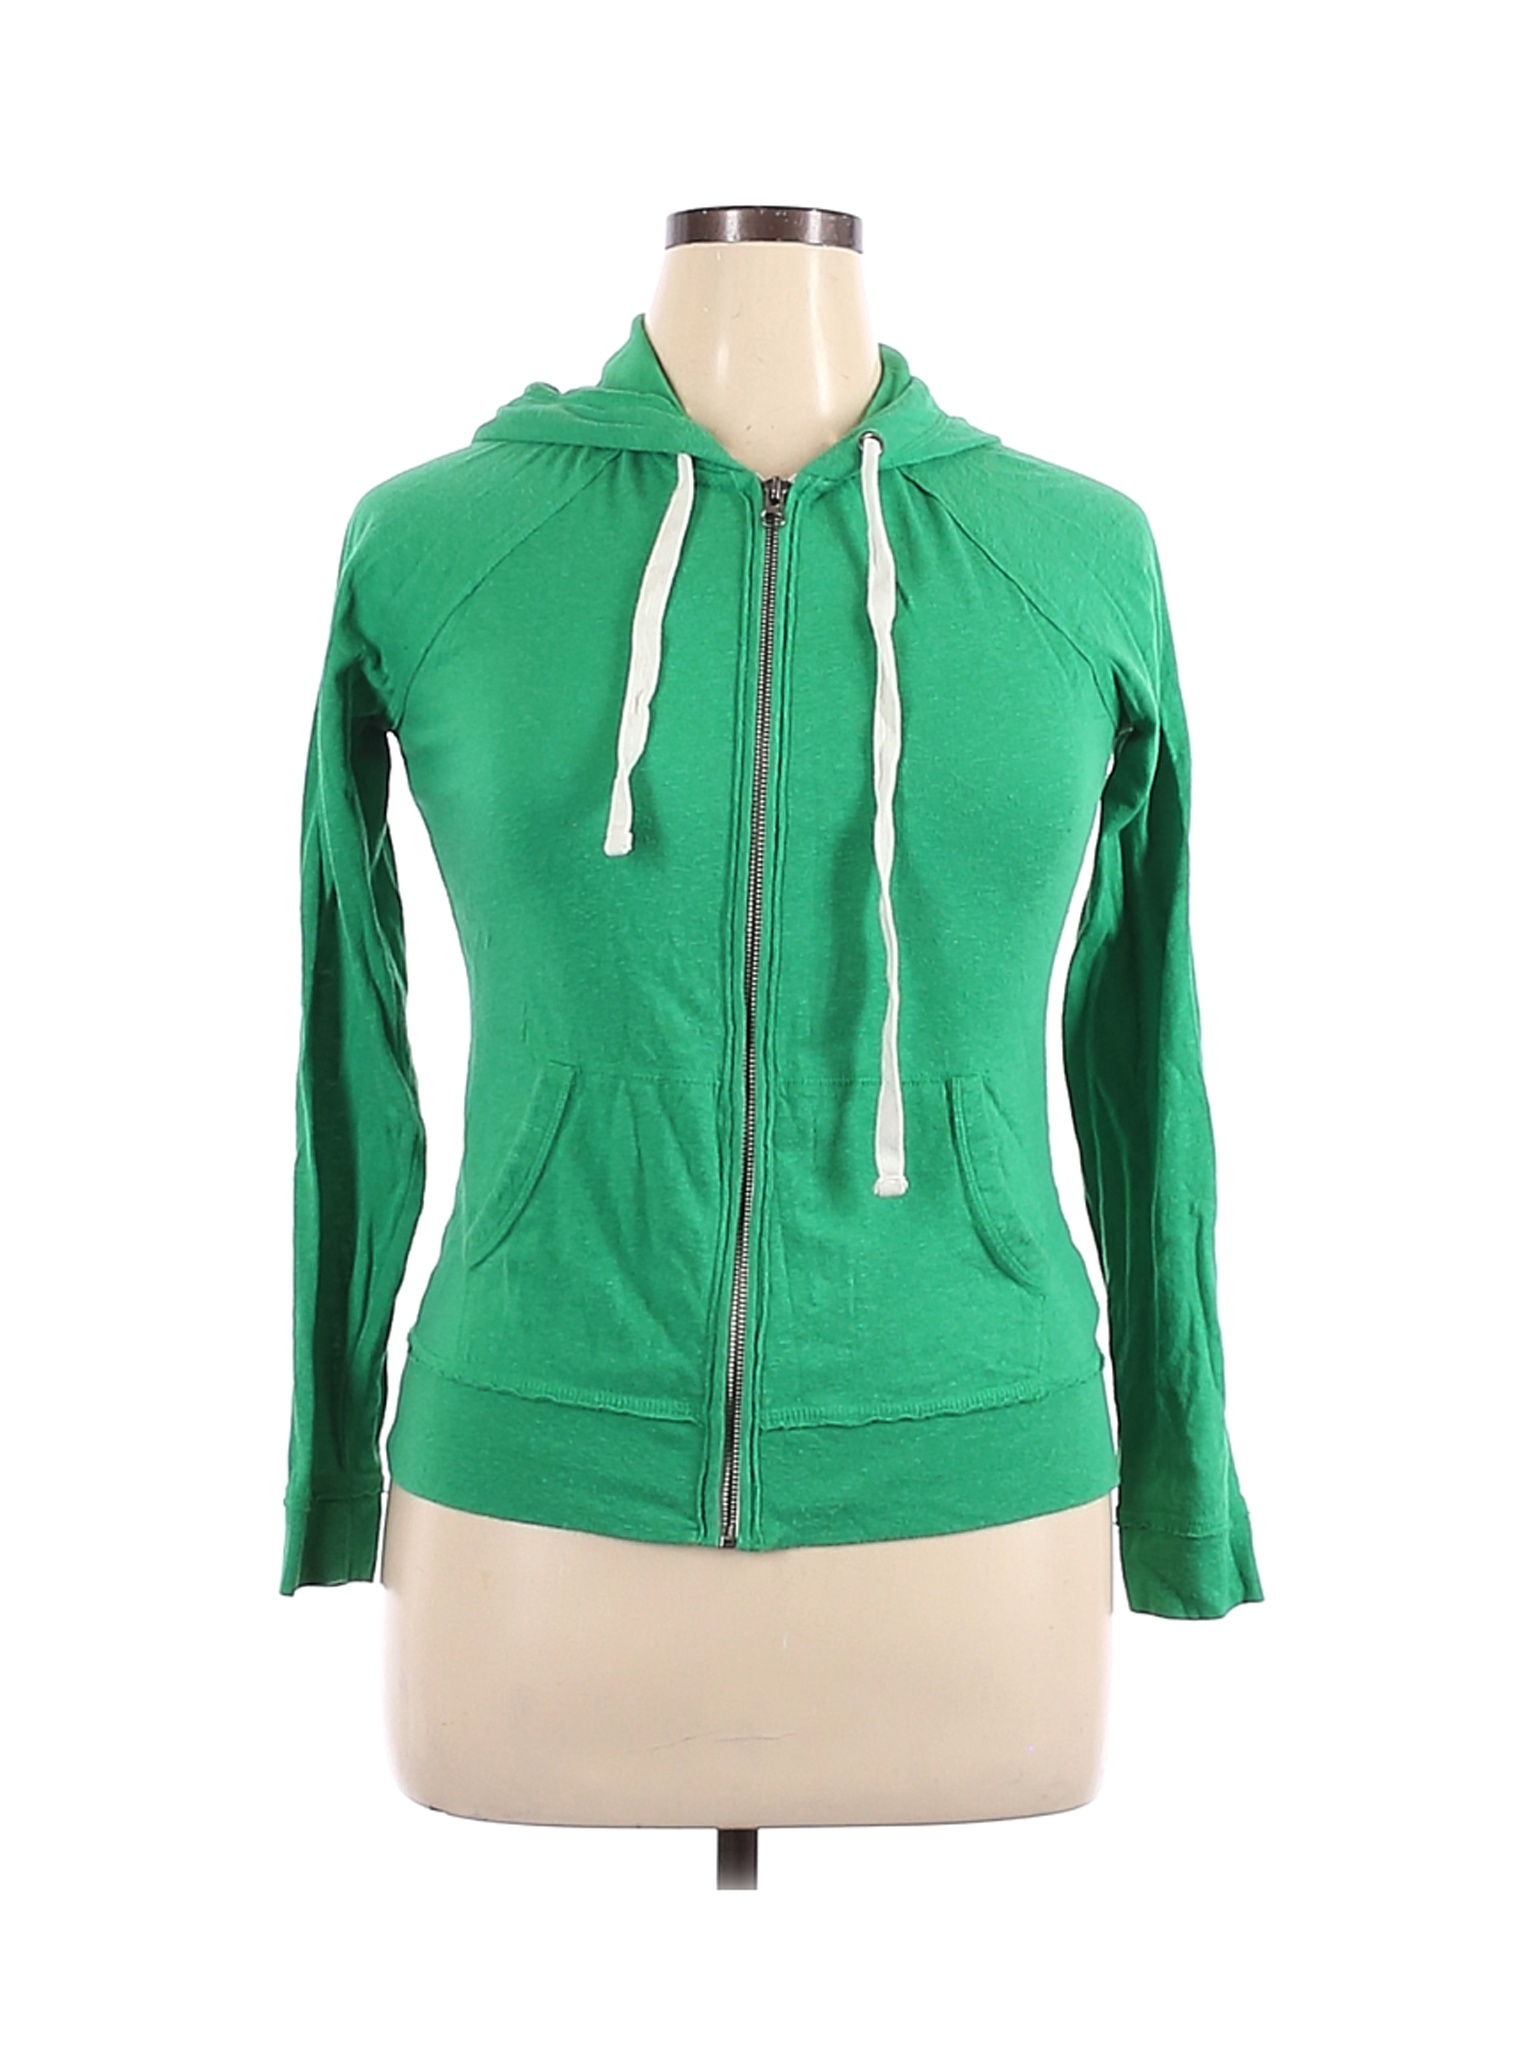 SO Women Green Zip Up Hoodie XL | eBay